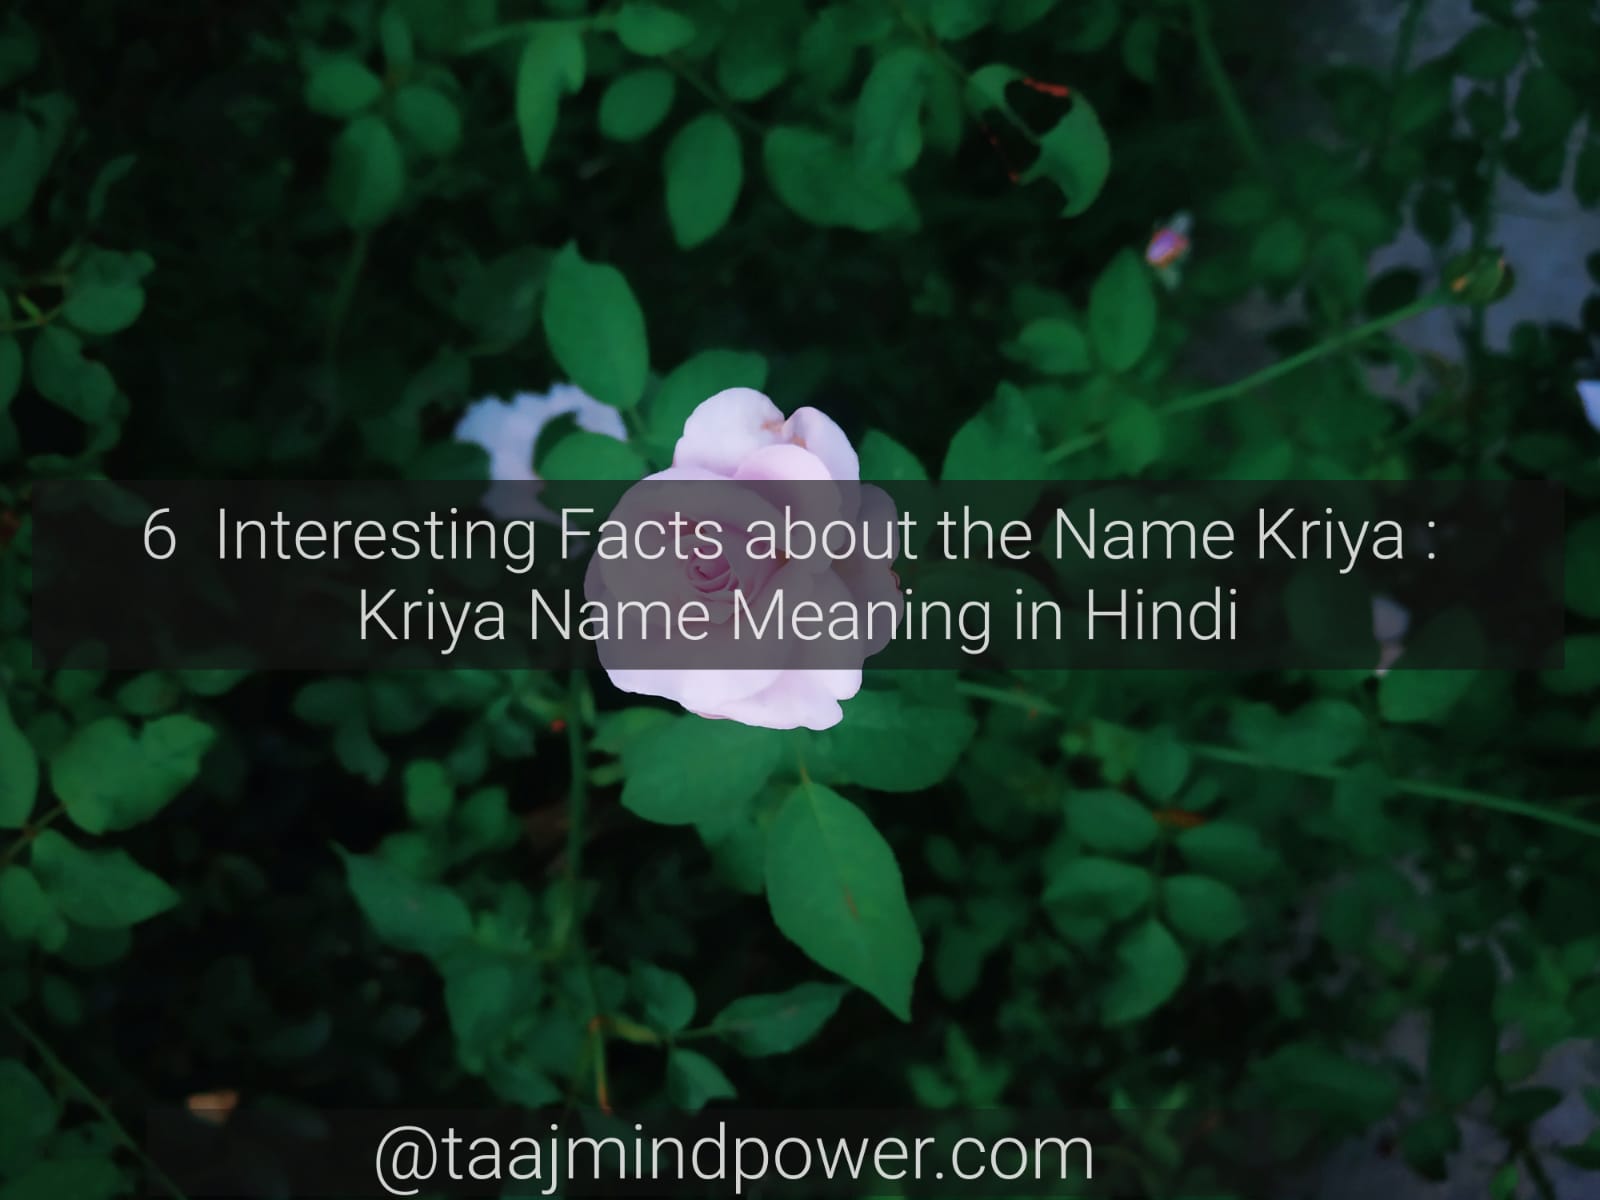 Kriya Name Meaning in Hindi